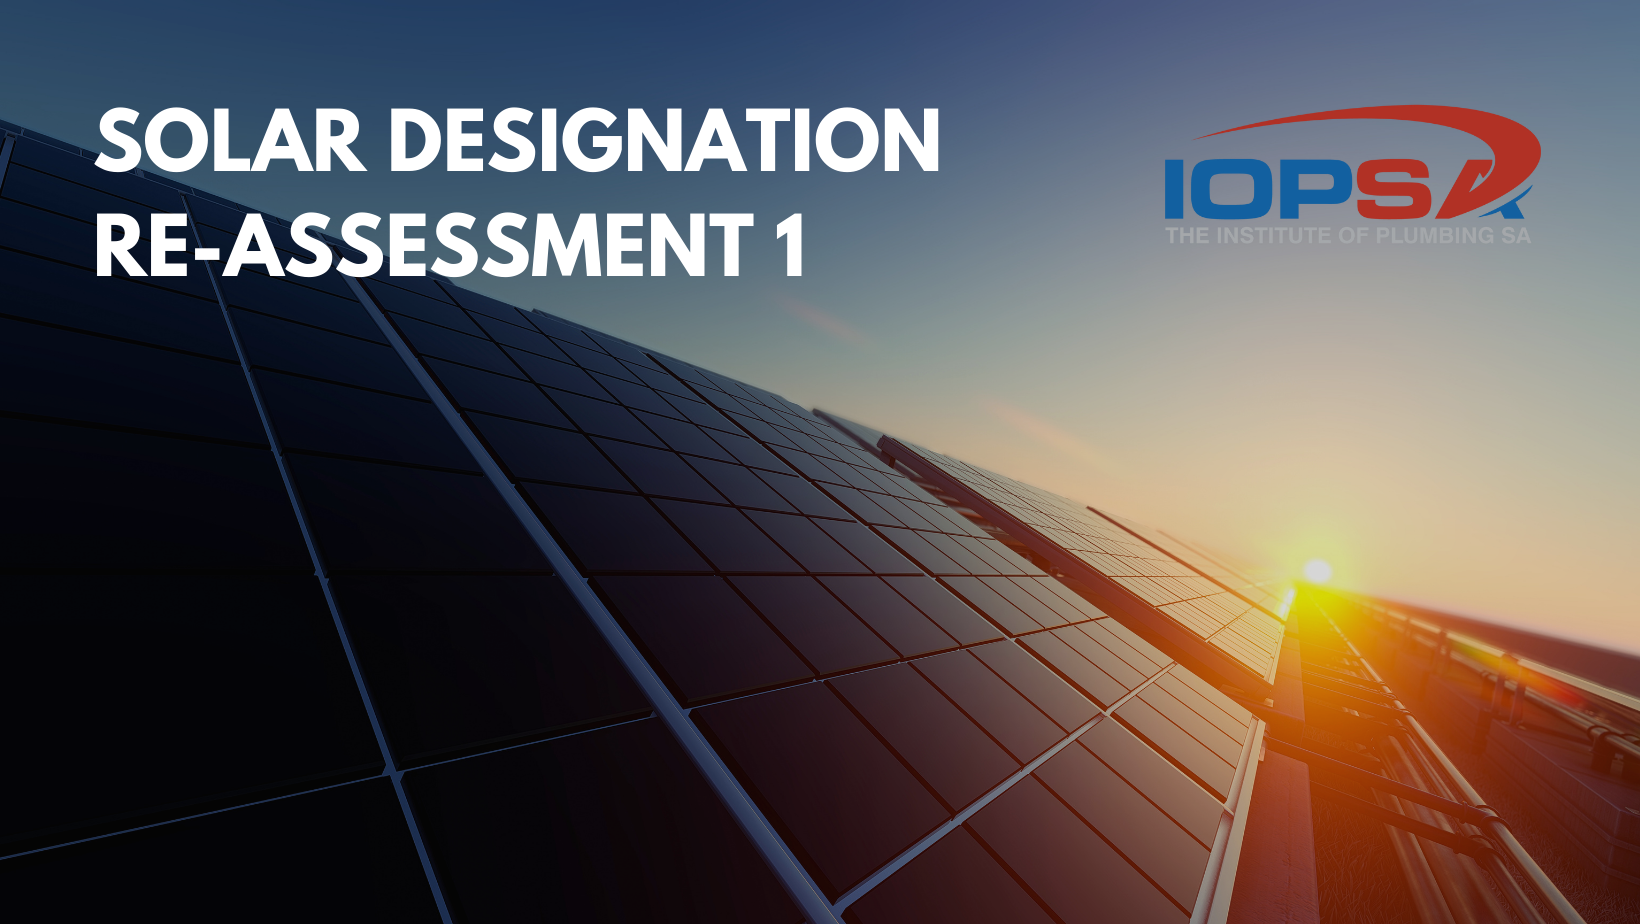 Solar Designation Re-assessment